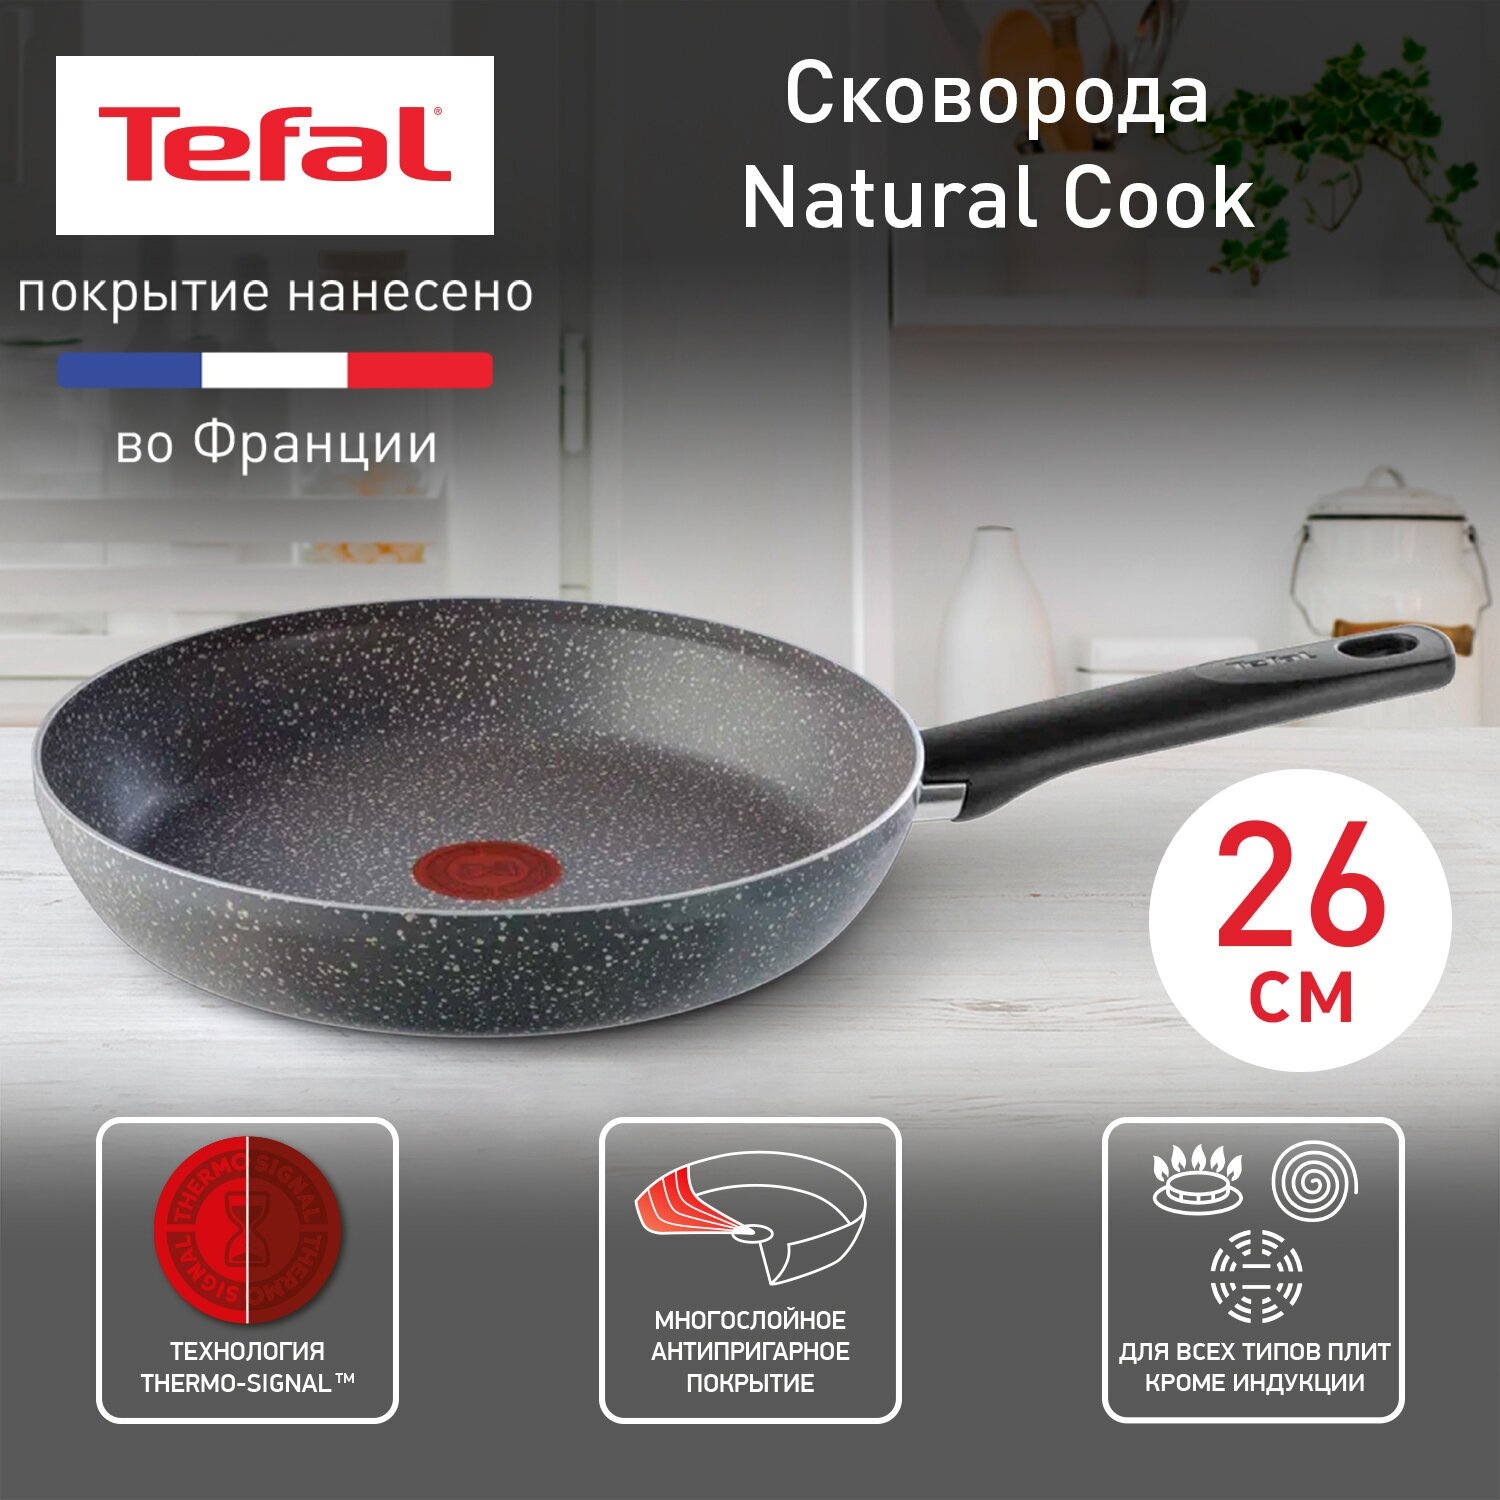 Сковорода Tefal Natural Cook 26cm 042 13 126